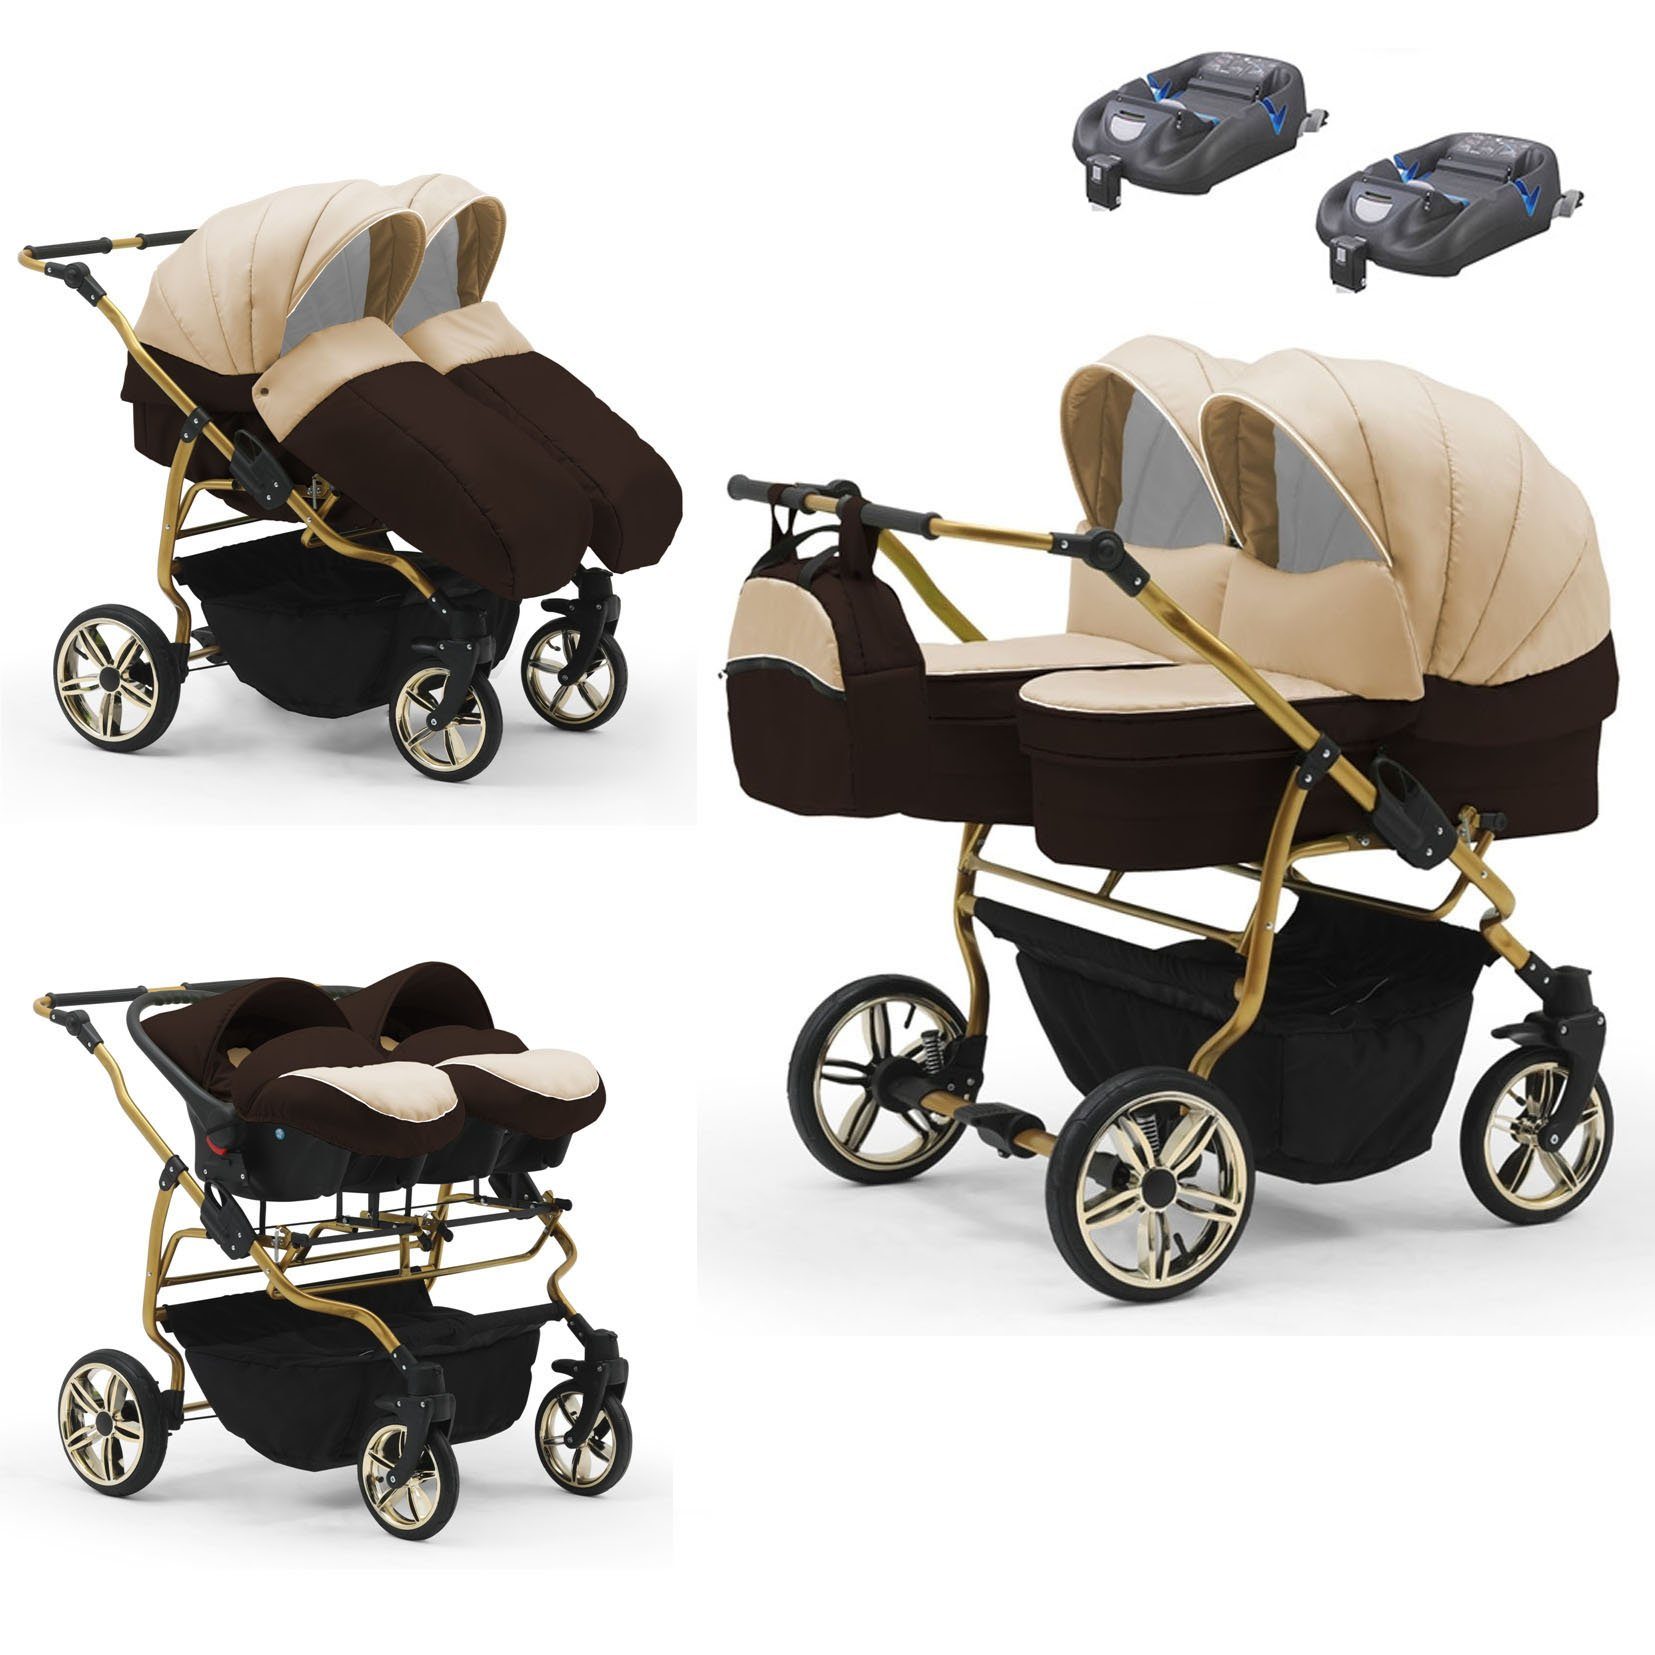 babies-on-wheels Zwillingswagen - in 33 4 Duet Zwillingswagen 1 Teile - Farben Gold Lux Beige-Braun-Beige-Braun 15 in